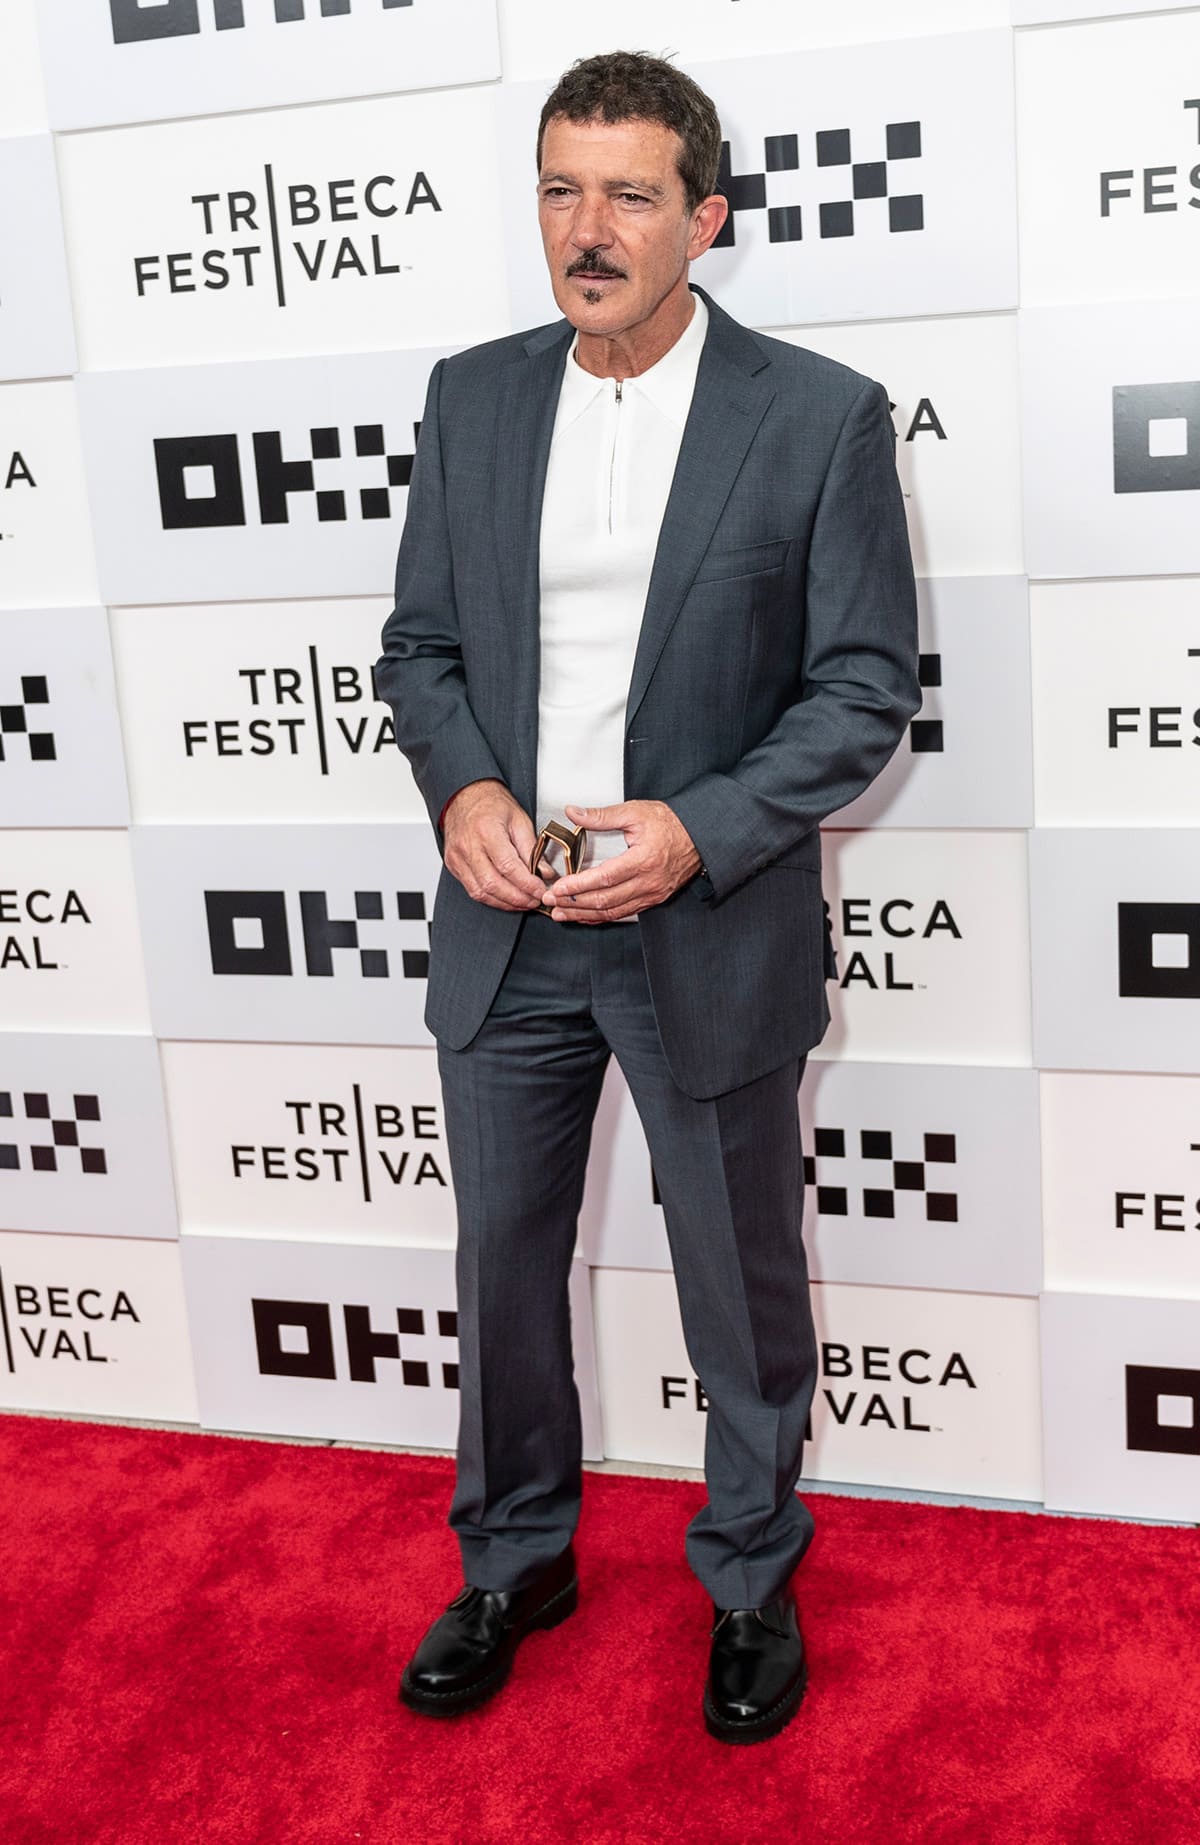 Antonio Banderas attends the Tribeca Film Festival